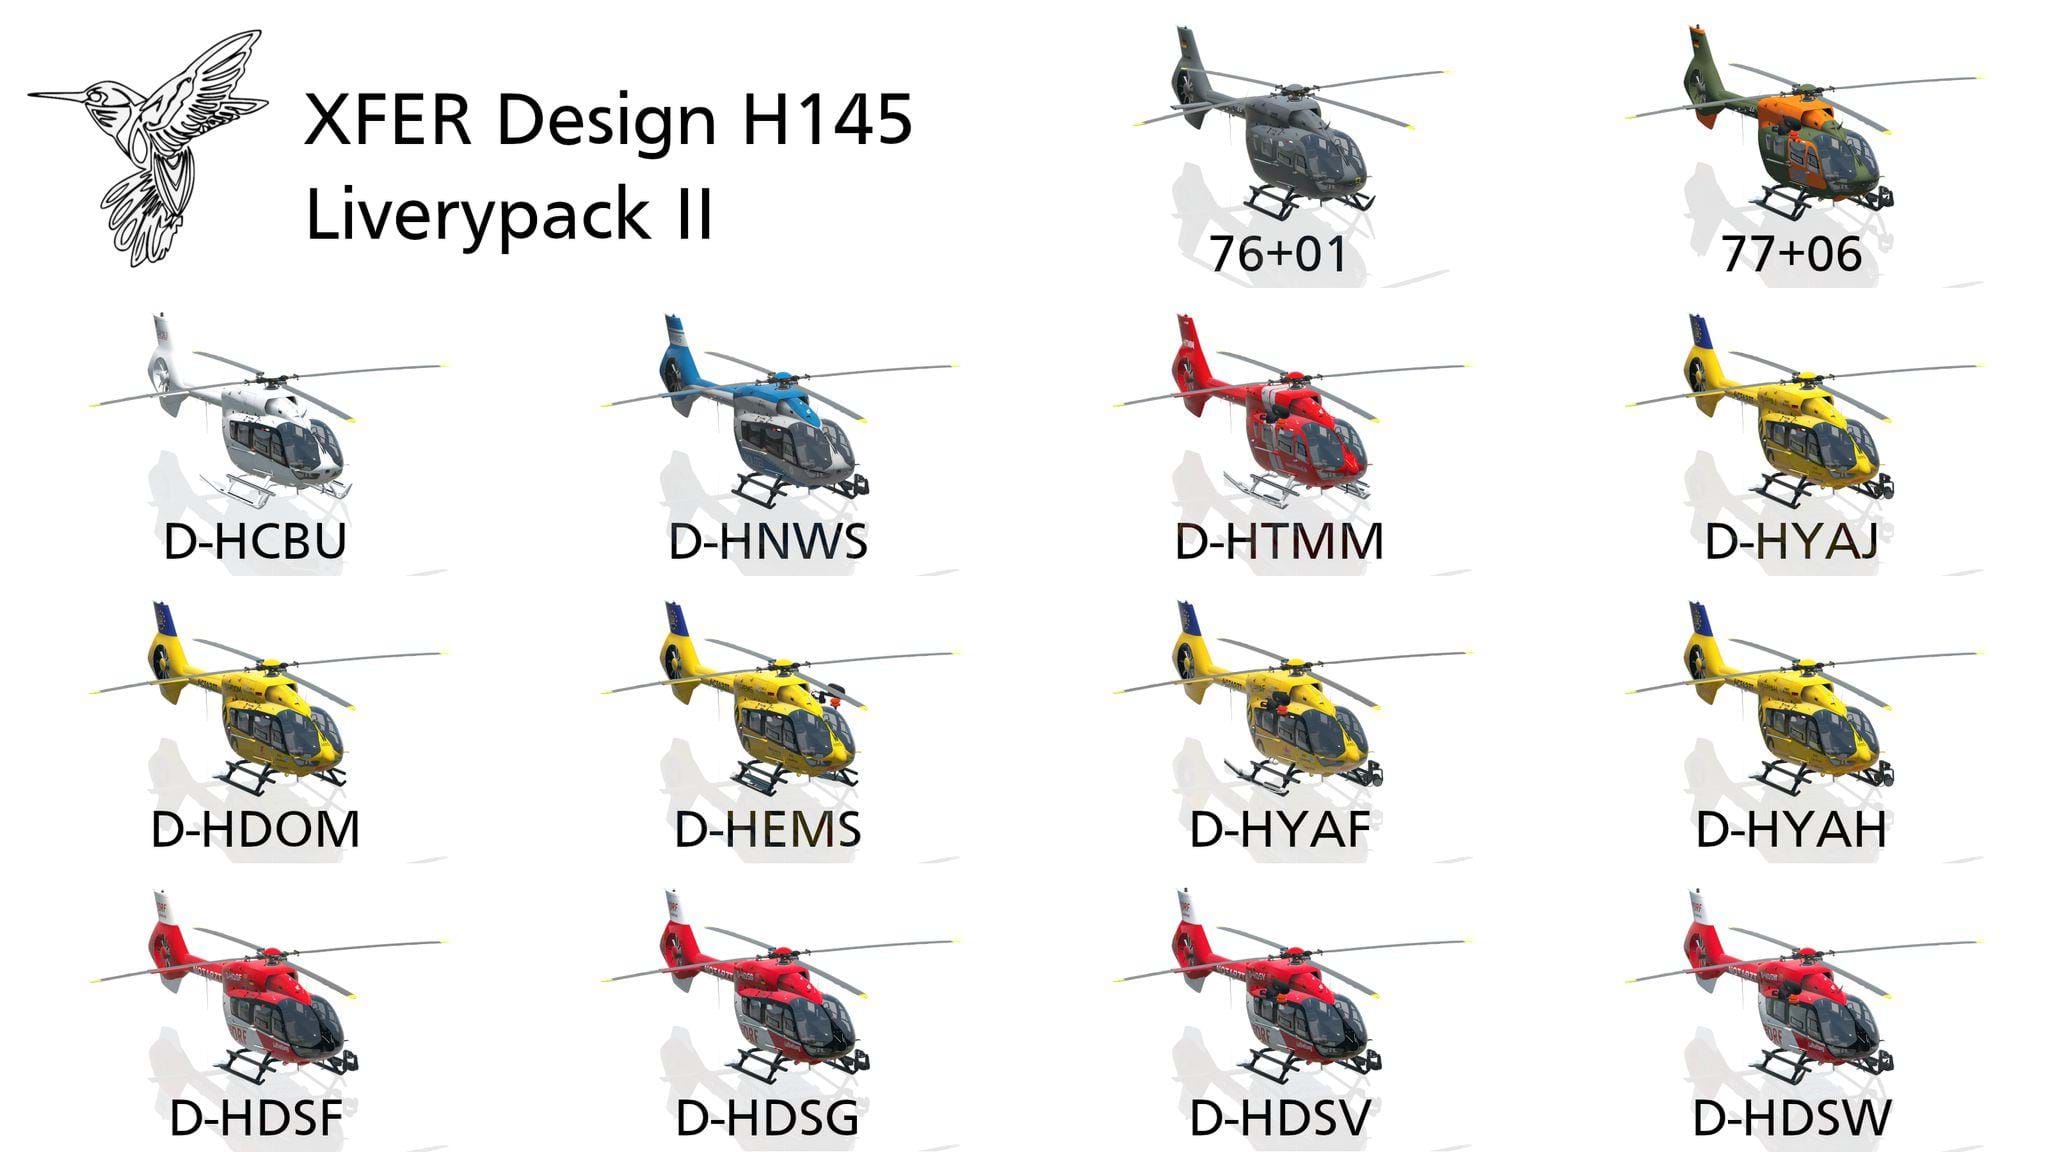 XFER Design H145 livery pack 2